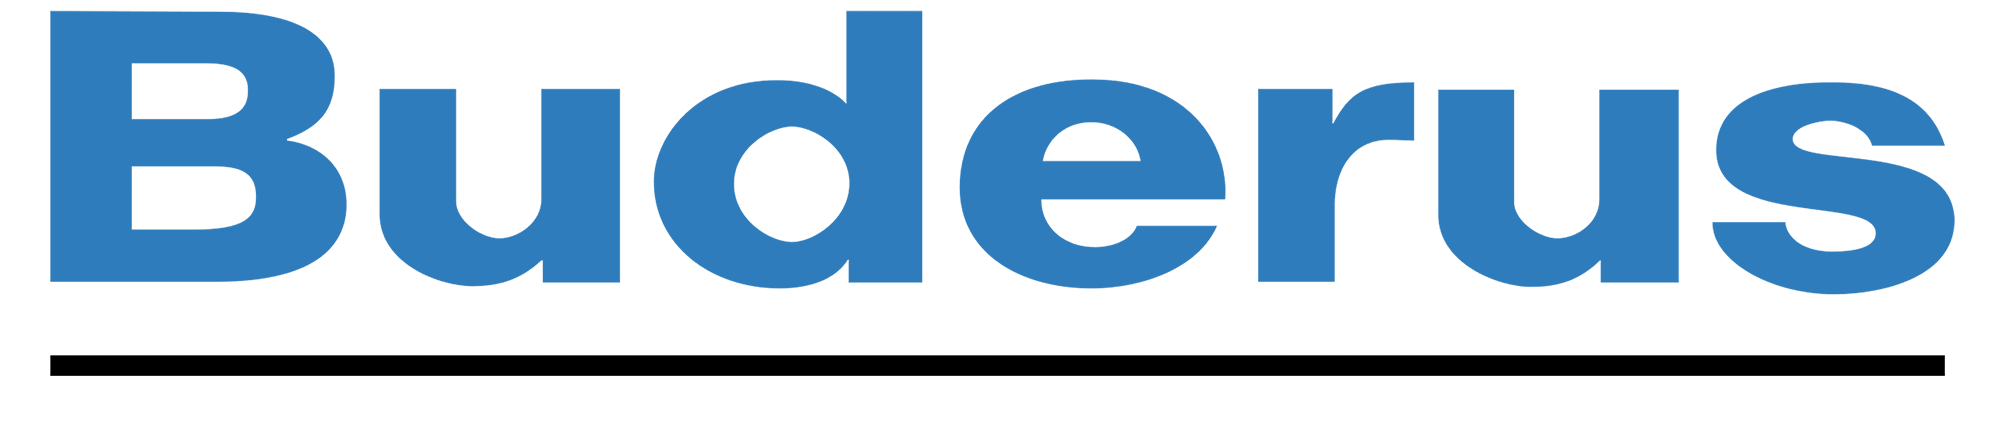 Buderus-logo